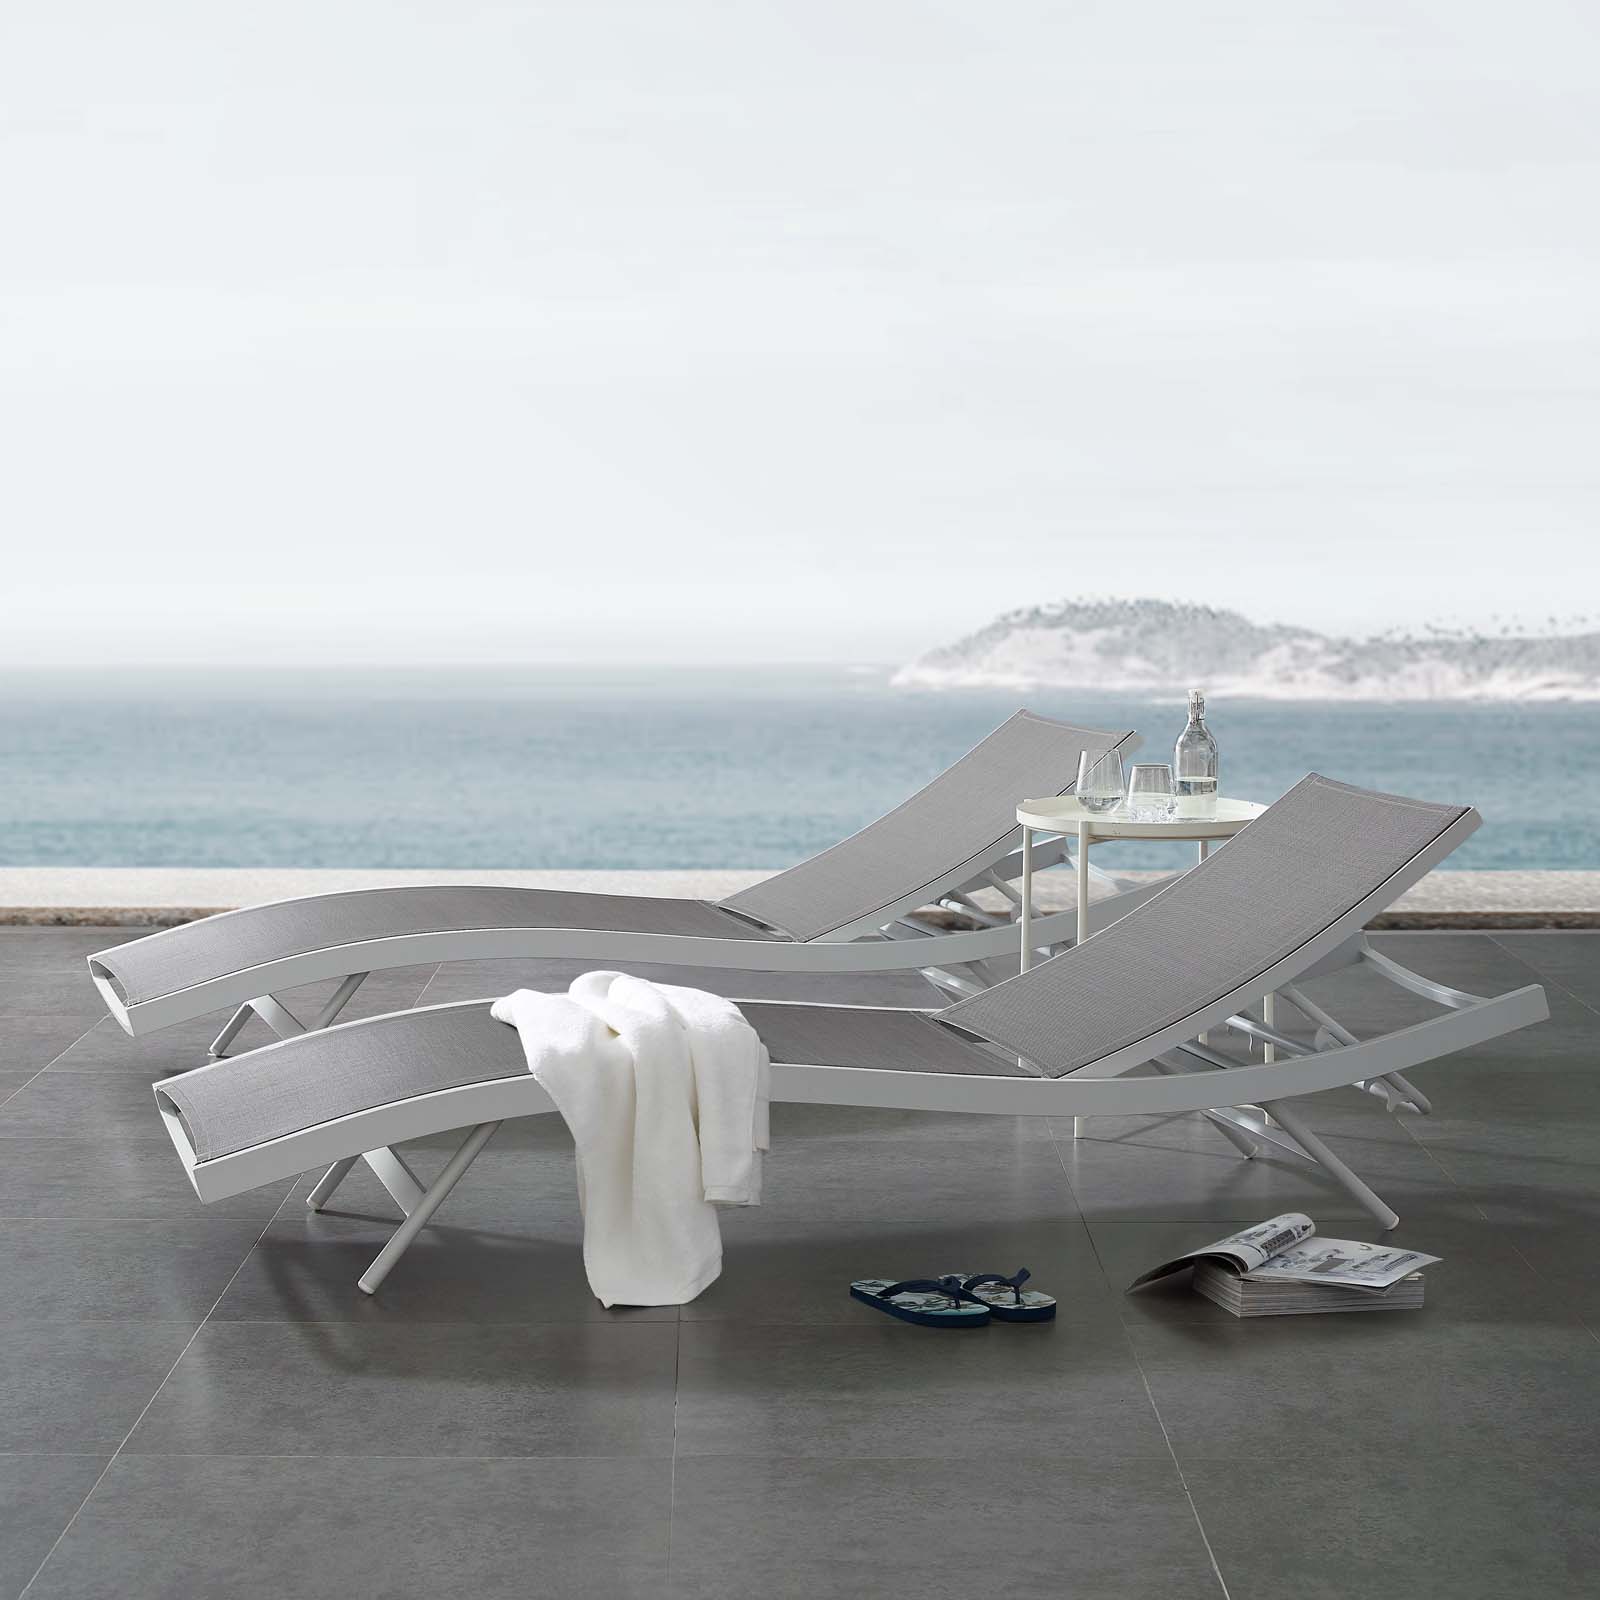 Modern Contemporary Urban Design Outdoor Patio Balcony Garden Furniture Lounge Chair Chaise, Fabric Aluminium, White Grey Gray - image 5 of 7